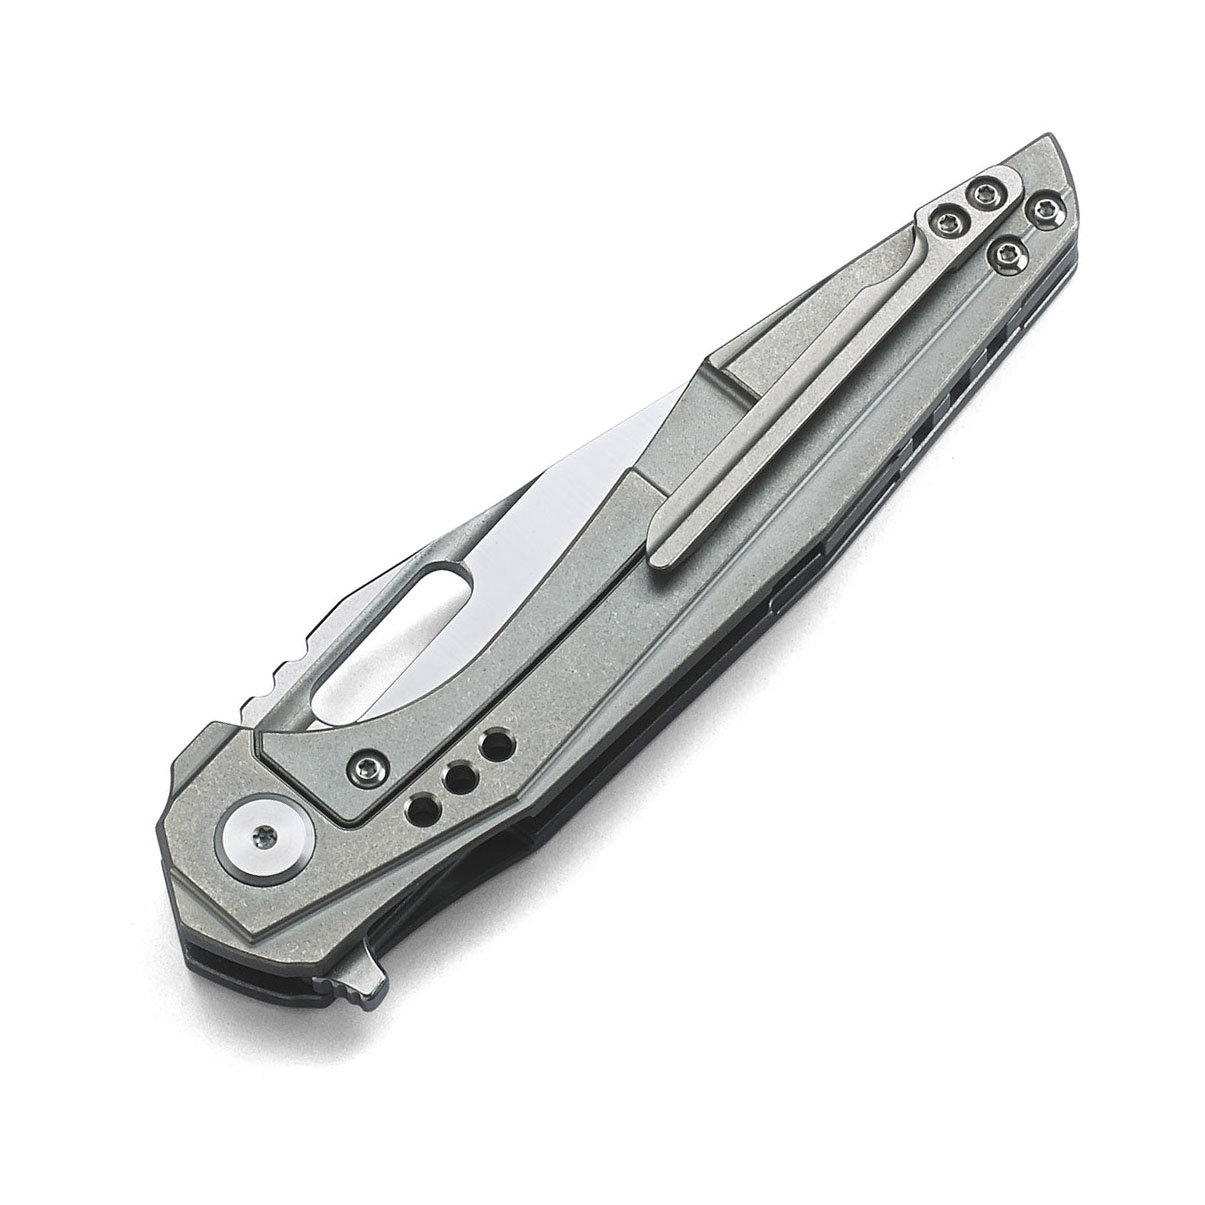 Bestech Knives Malware S35VN钢 钛合金柄 BT1902A 1460